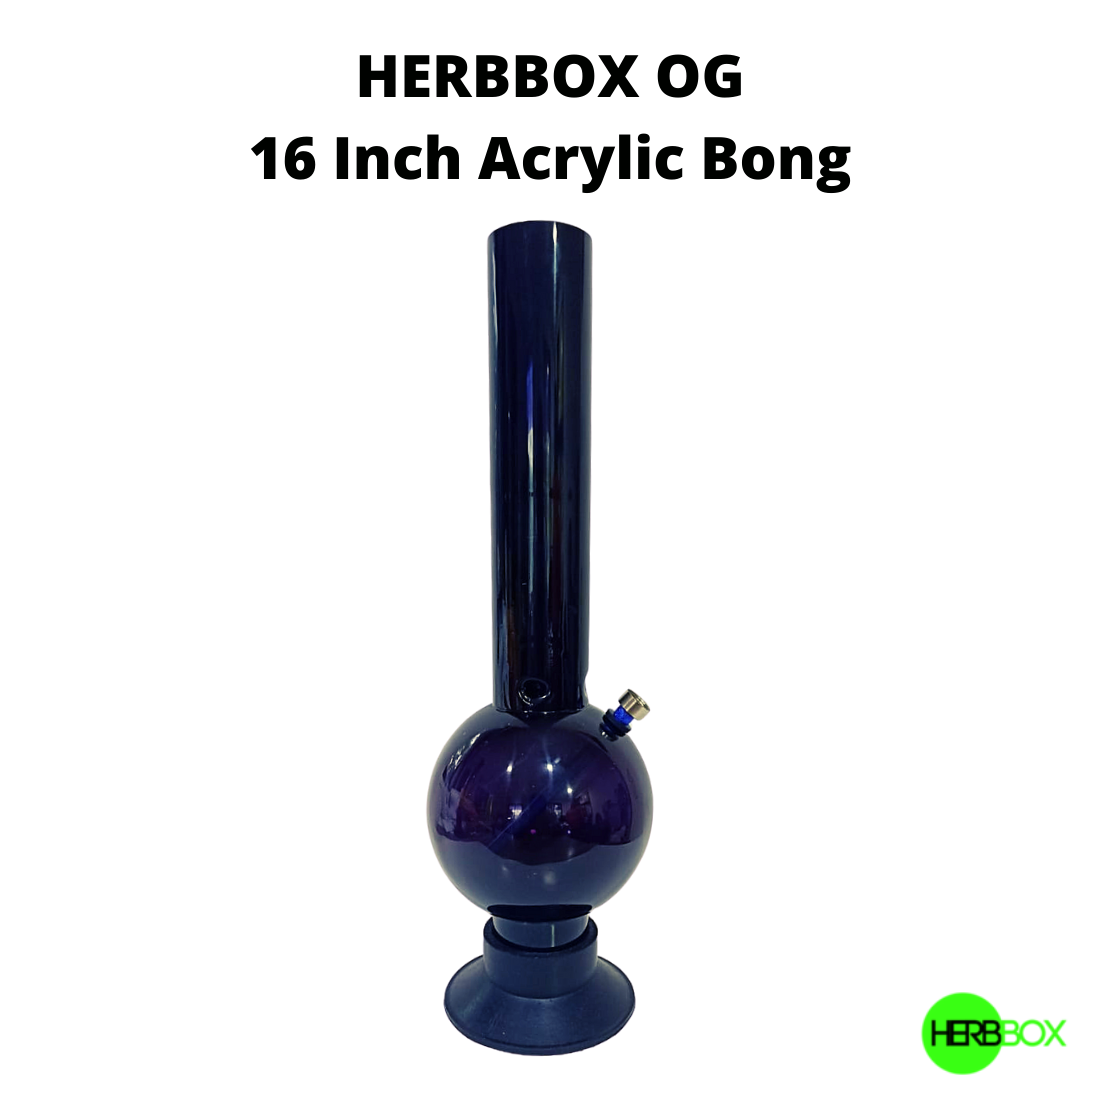 HERBBOX OG 16 Inch Acrylic Bong are now available on Jonnybaba Lifestyle